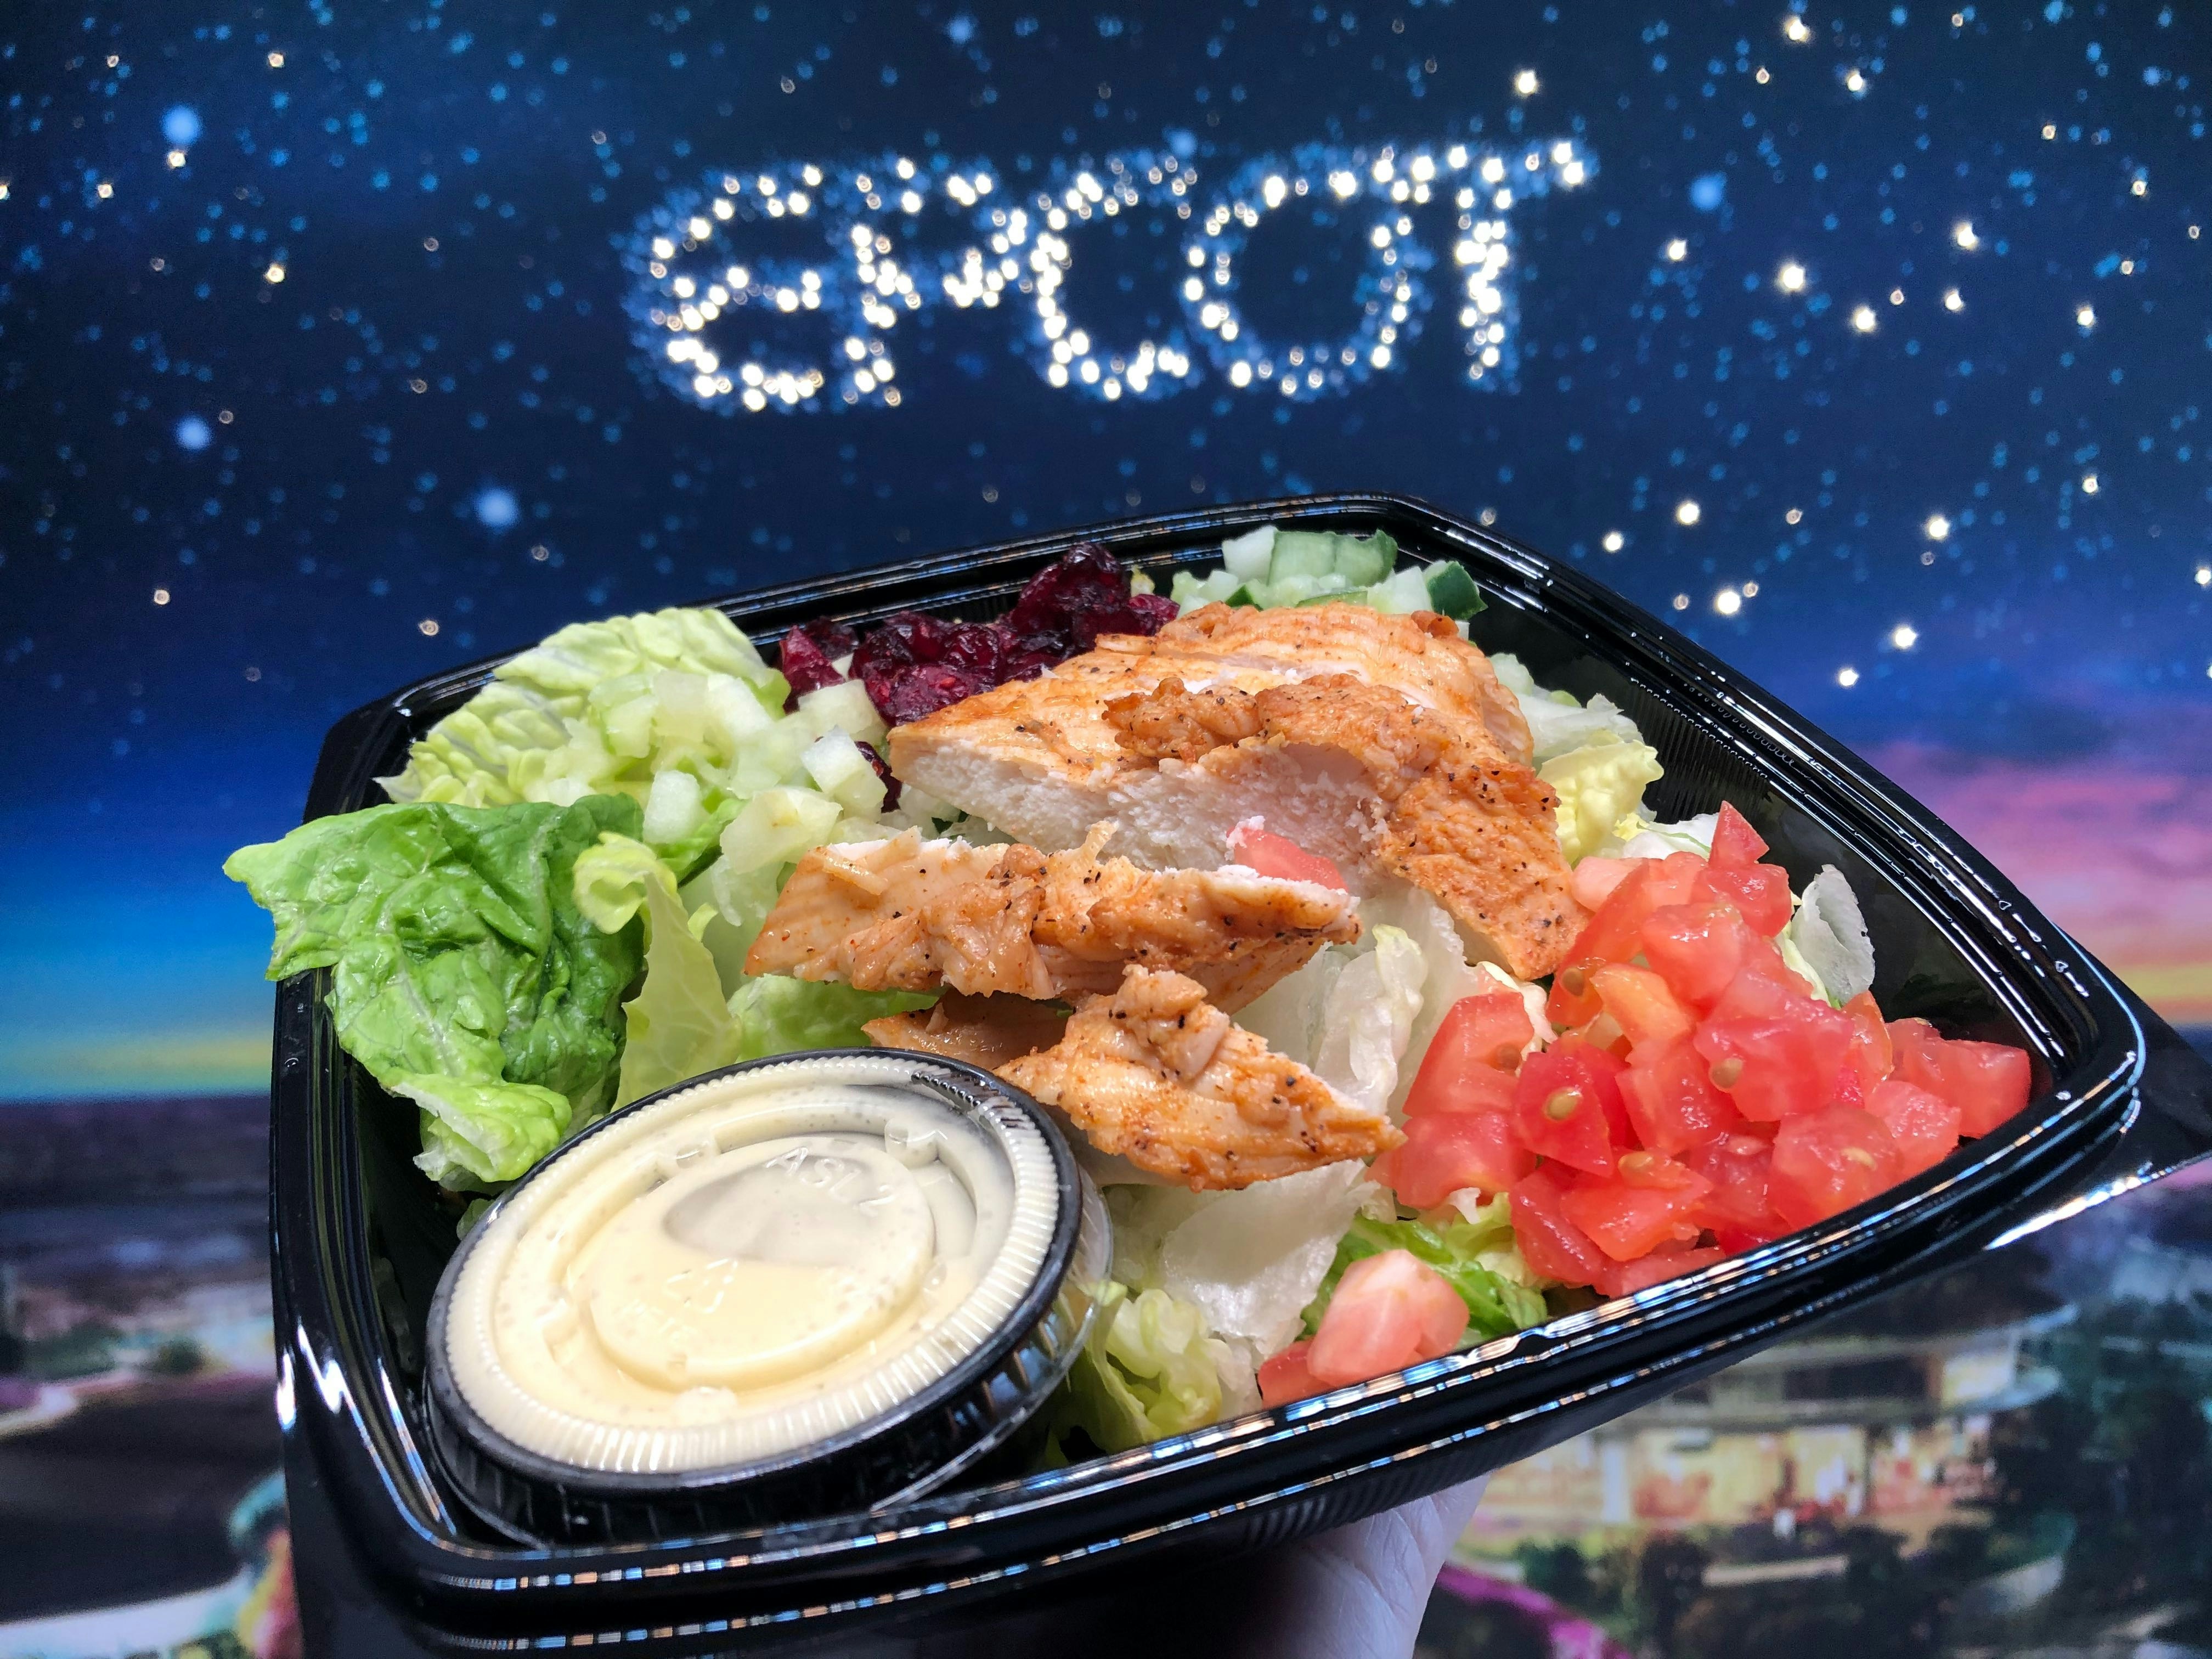 eats at epcot experience sandwich salad review 7.jpg?auto=compress%2Cformat&ixlib=php 1.2